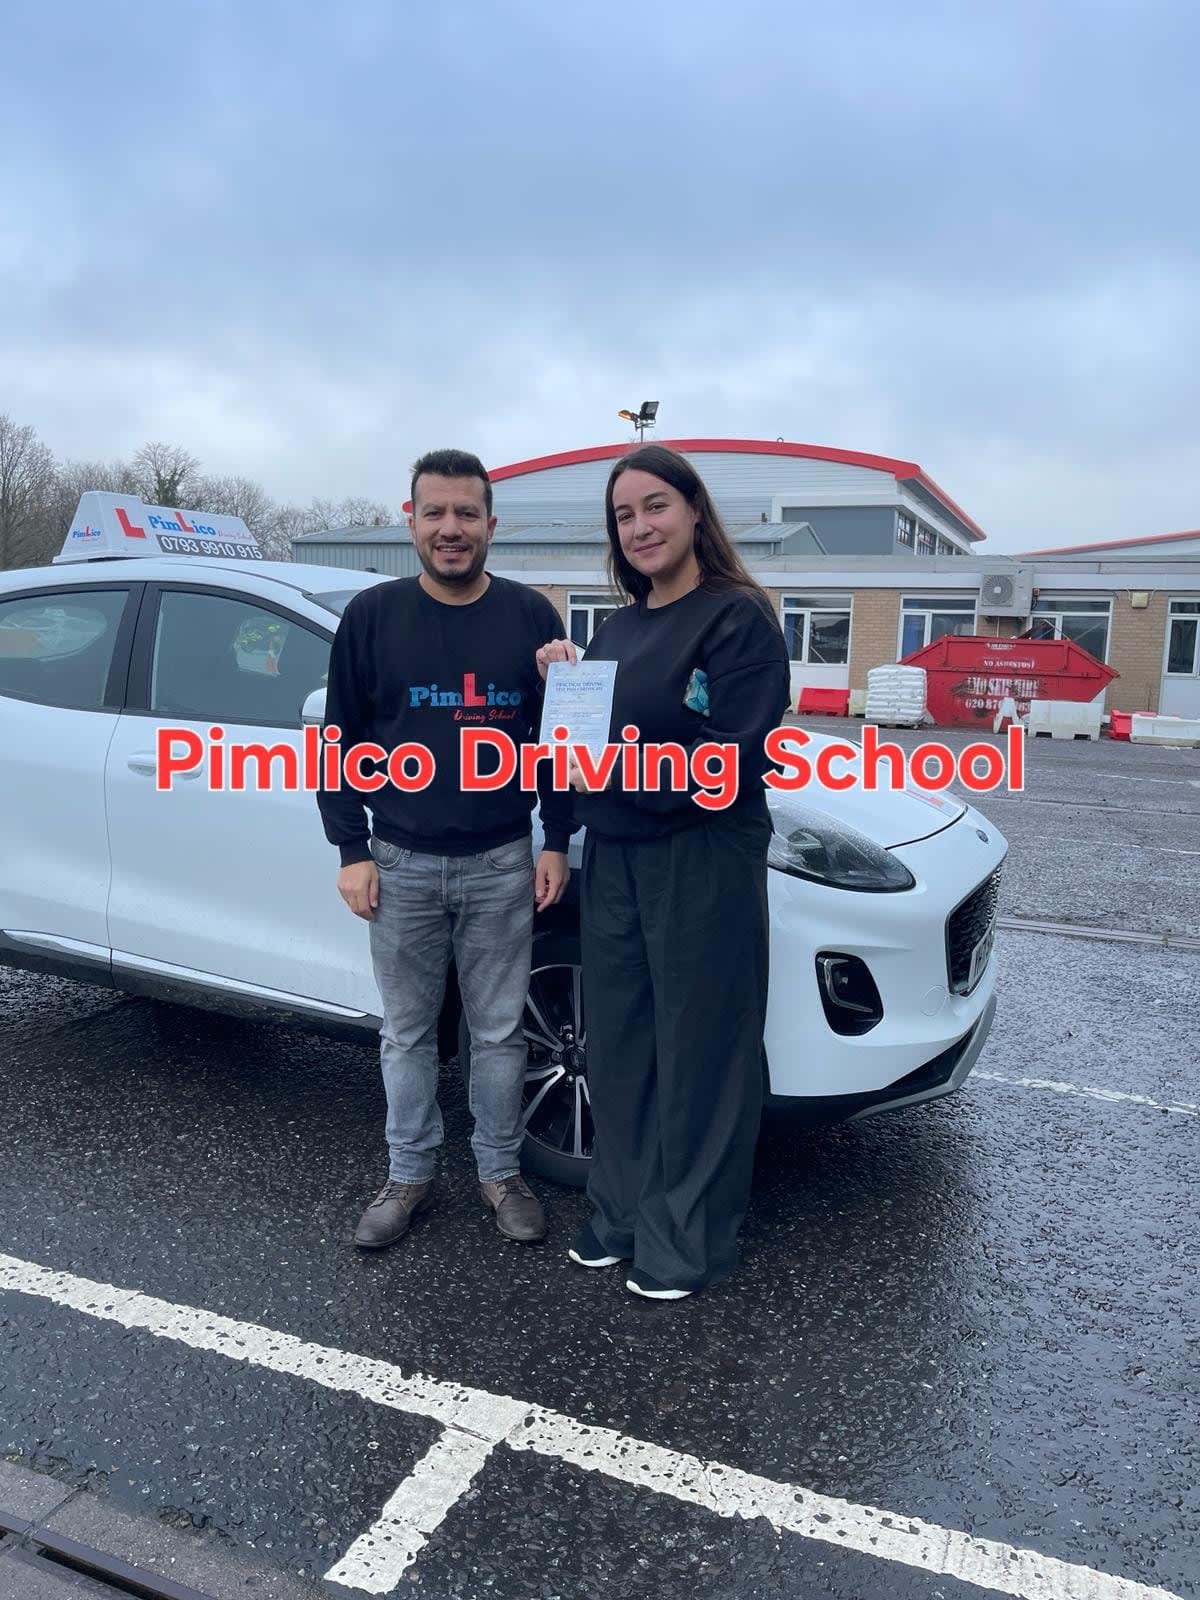 Images Pimlico Driving School